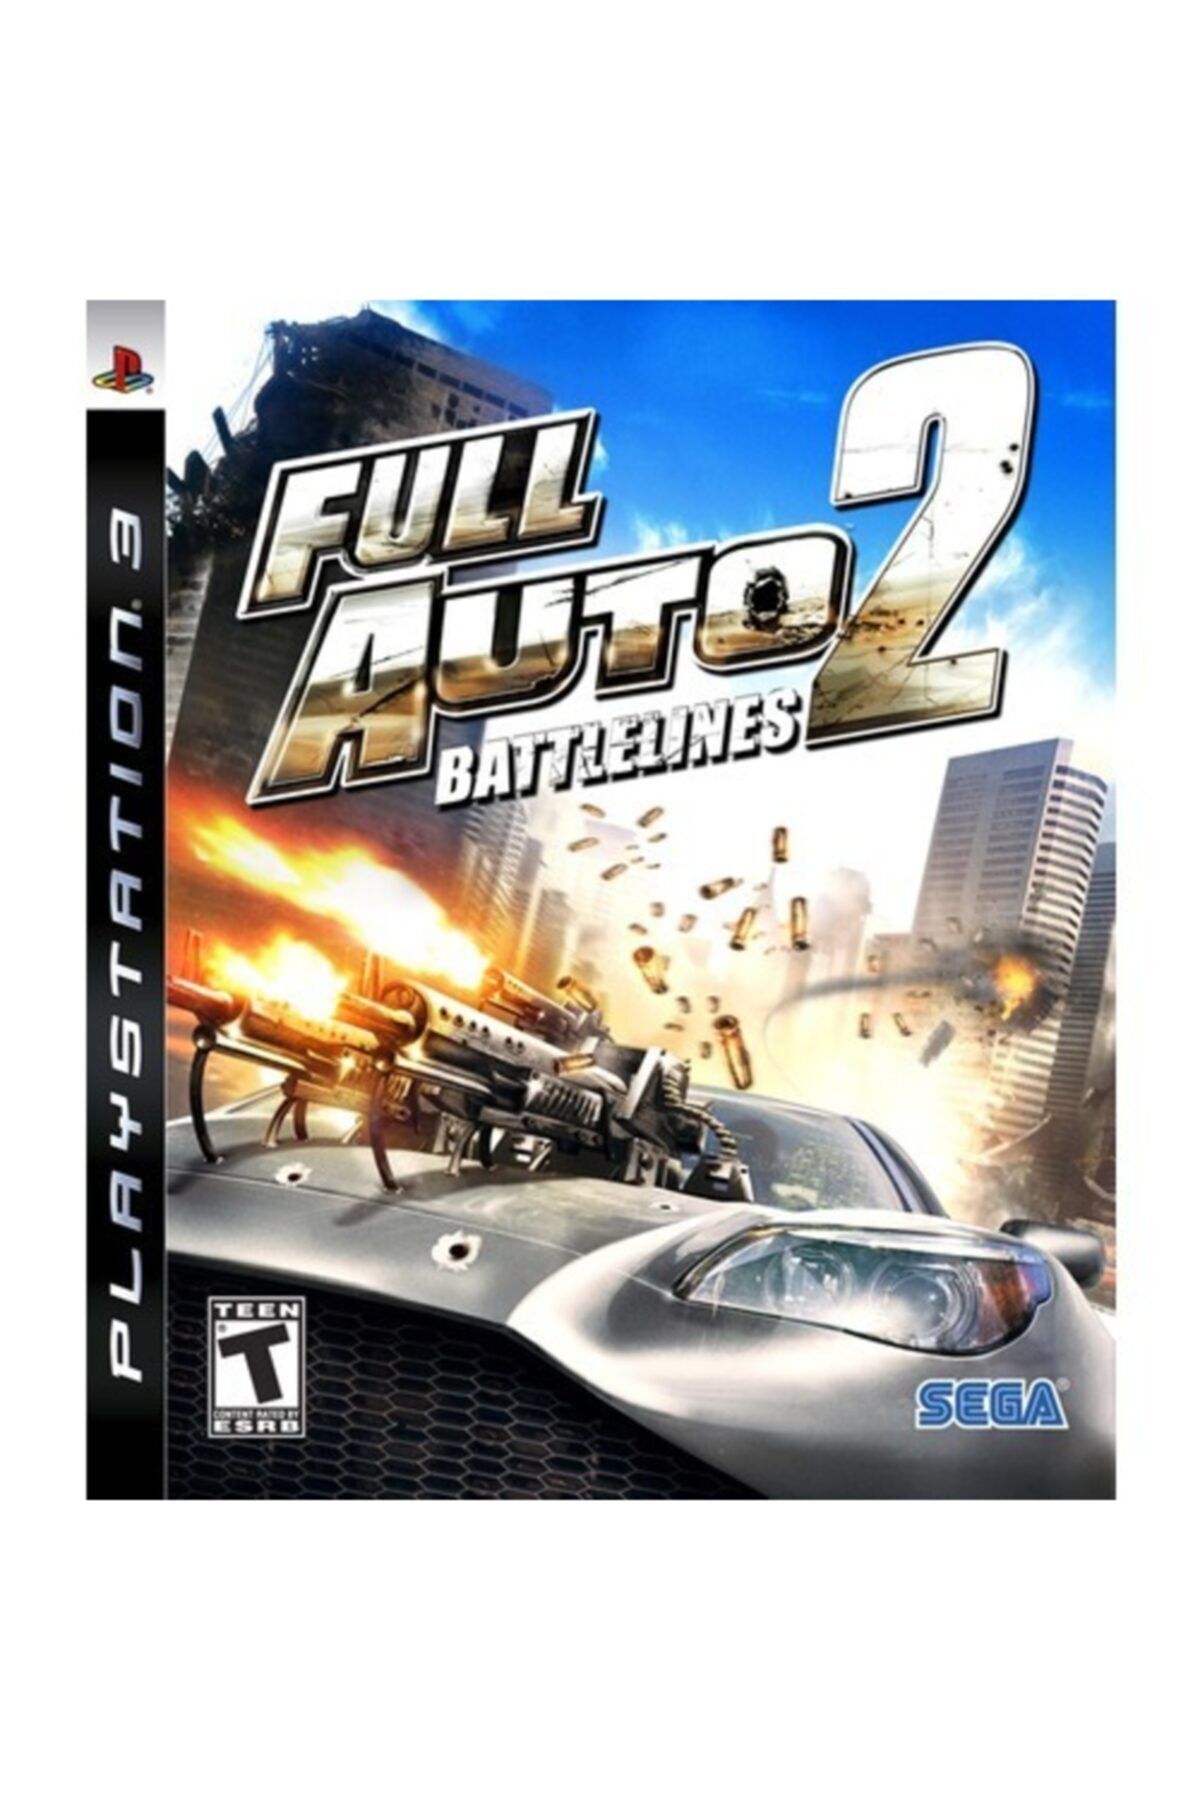 Sega Ps3 Full Auto 2 Battlelines